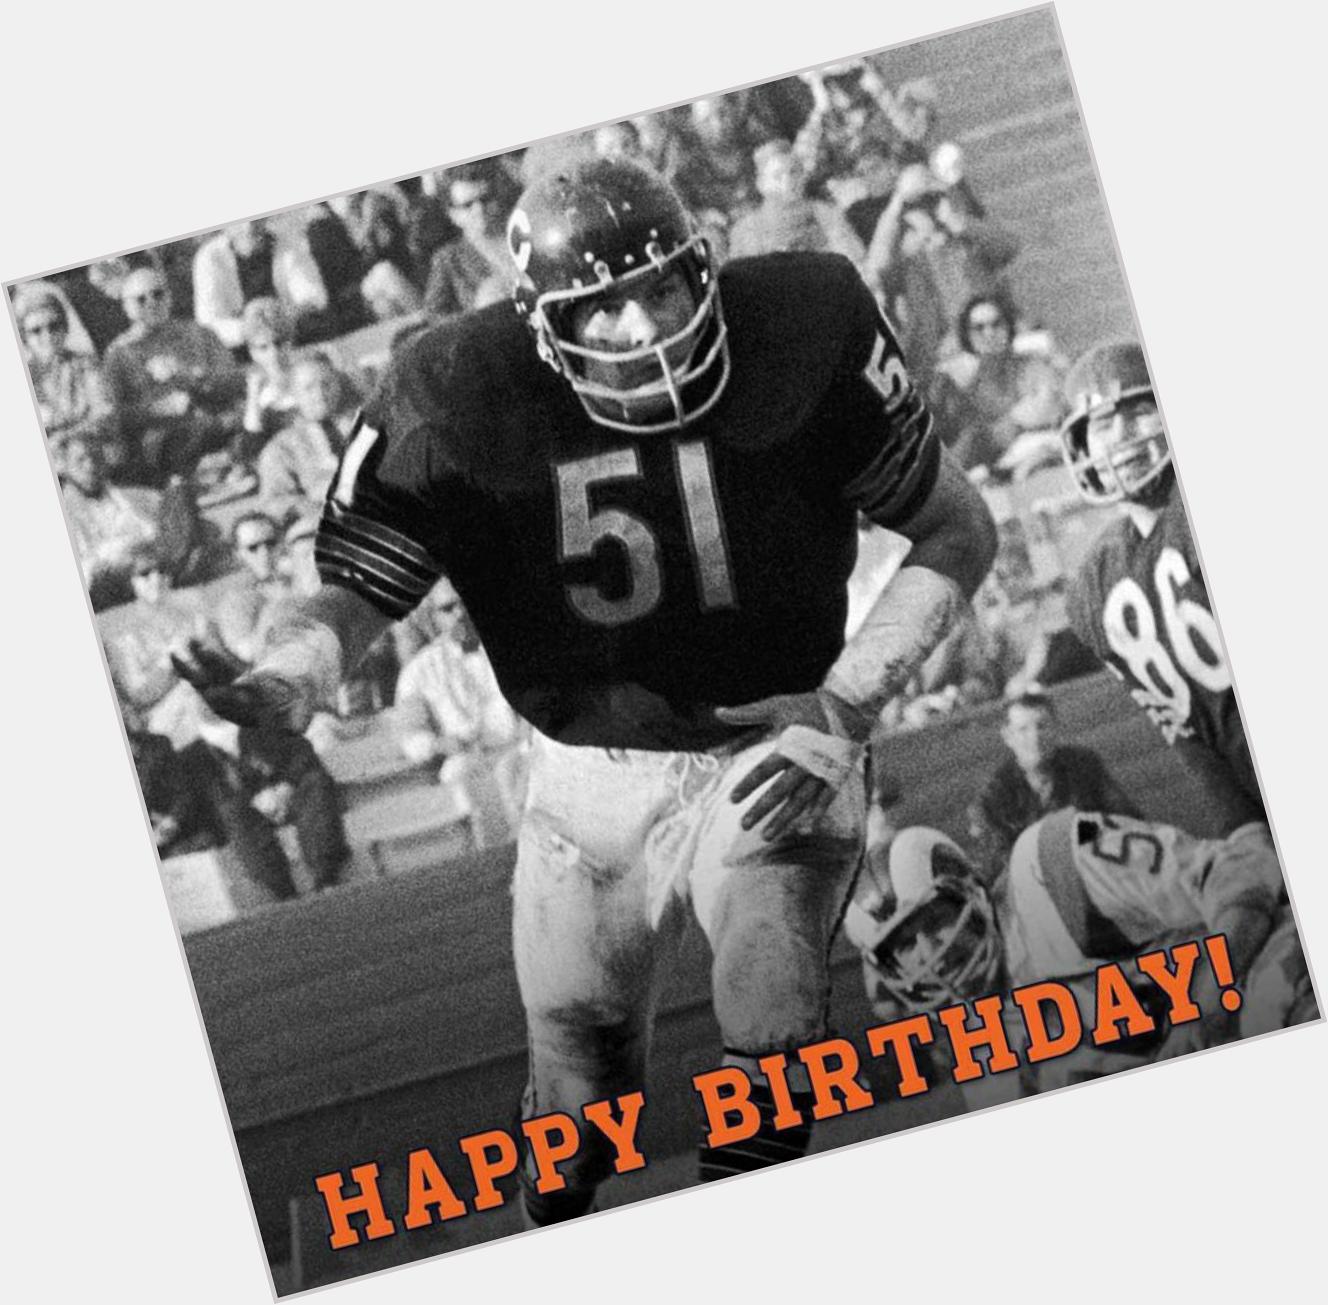   Happy Birthday to the legendary Dick Butkus born in on December 9, 1942. 